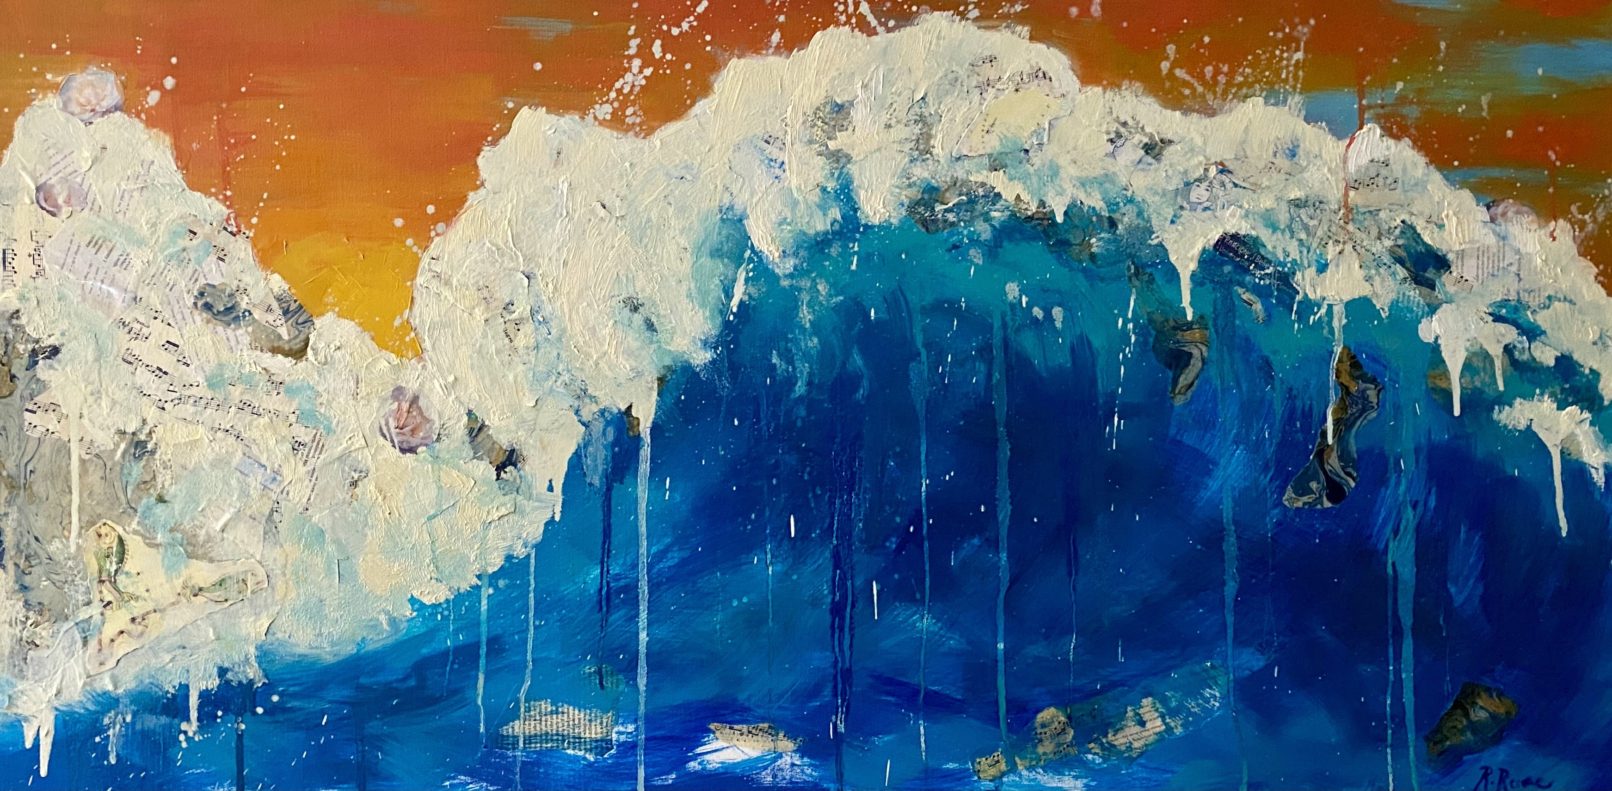 Ocean Wave Painting by award-winning artist Rhianna Rose Hixon